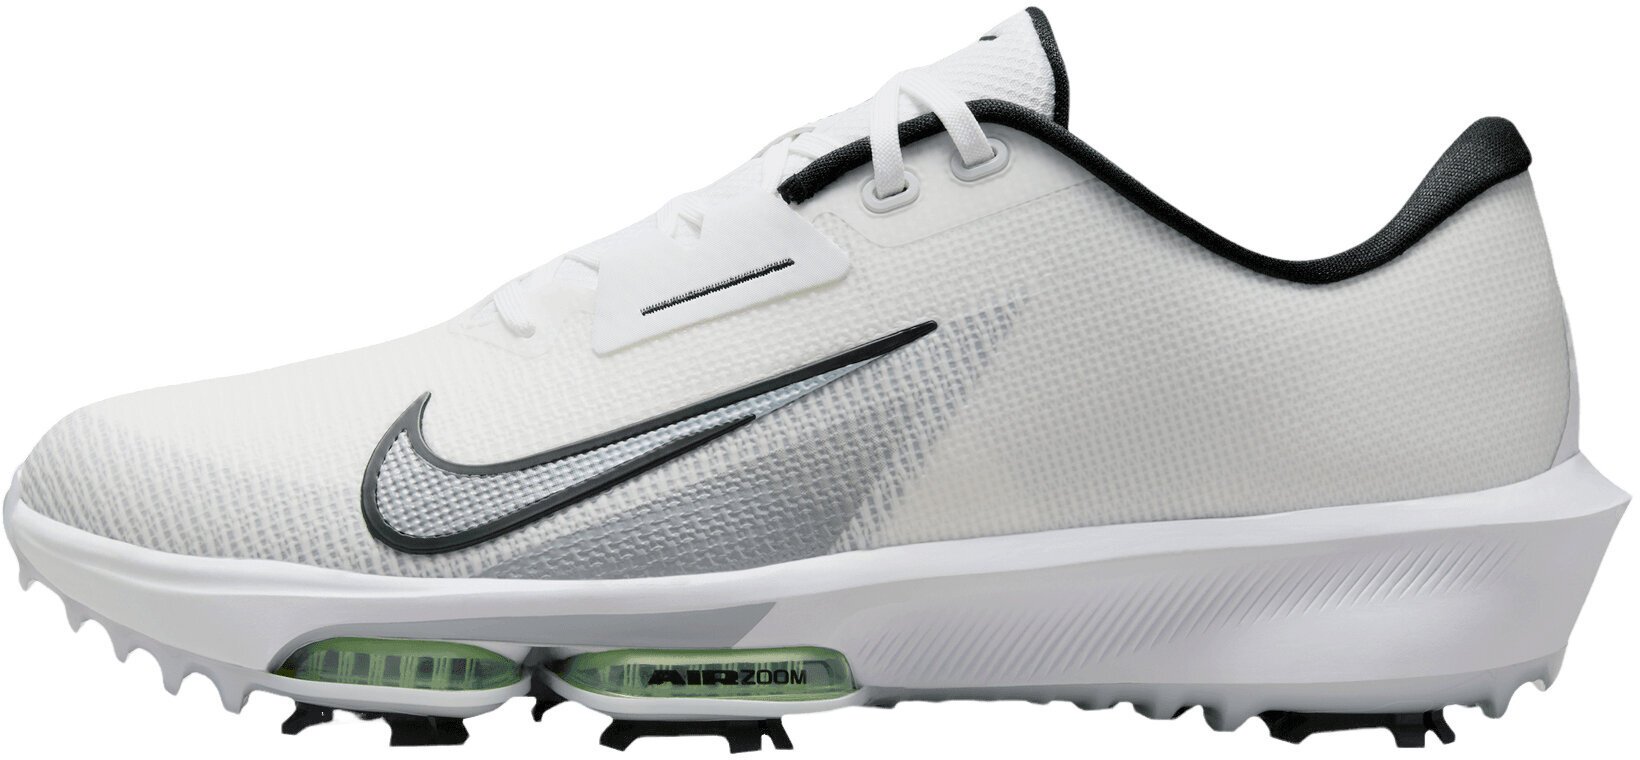 Nike Air Zoom Infinity Tour Next 2 Unisex Golf Shoes White/Black/Vapor Green/Pure Platinum 45,5 unisex